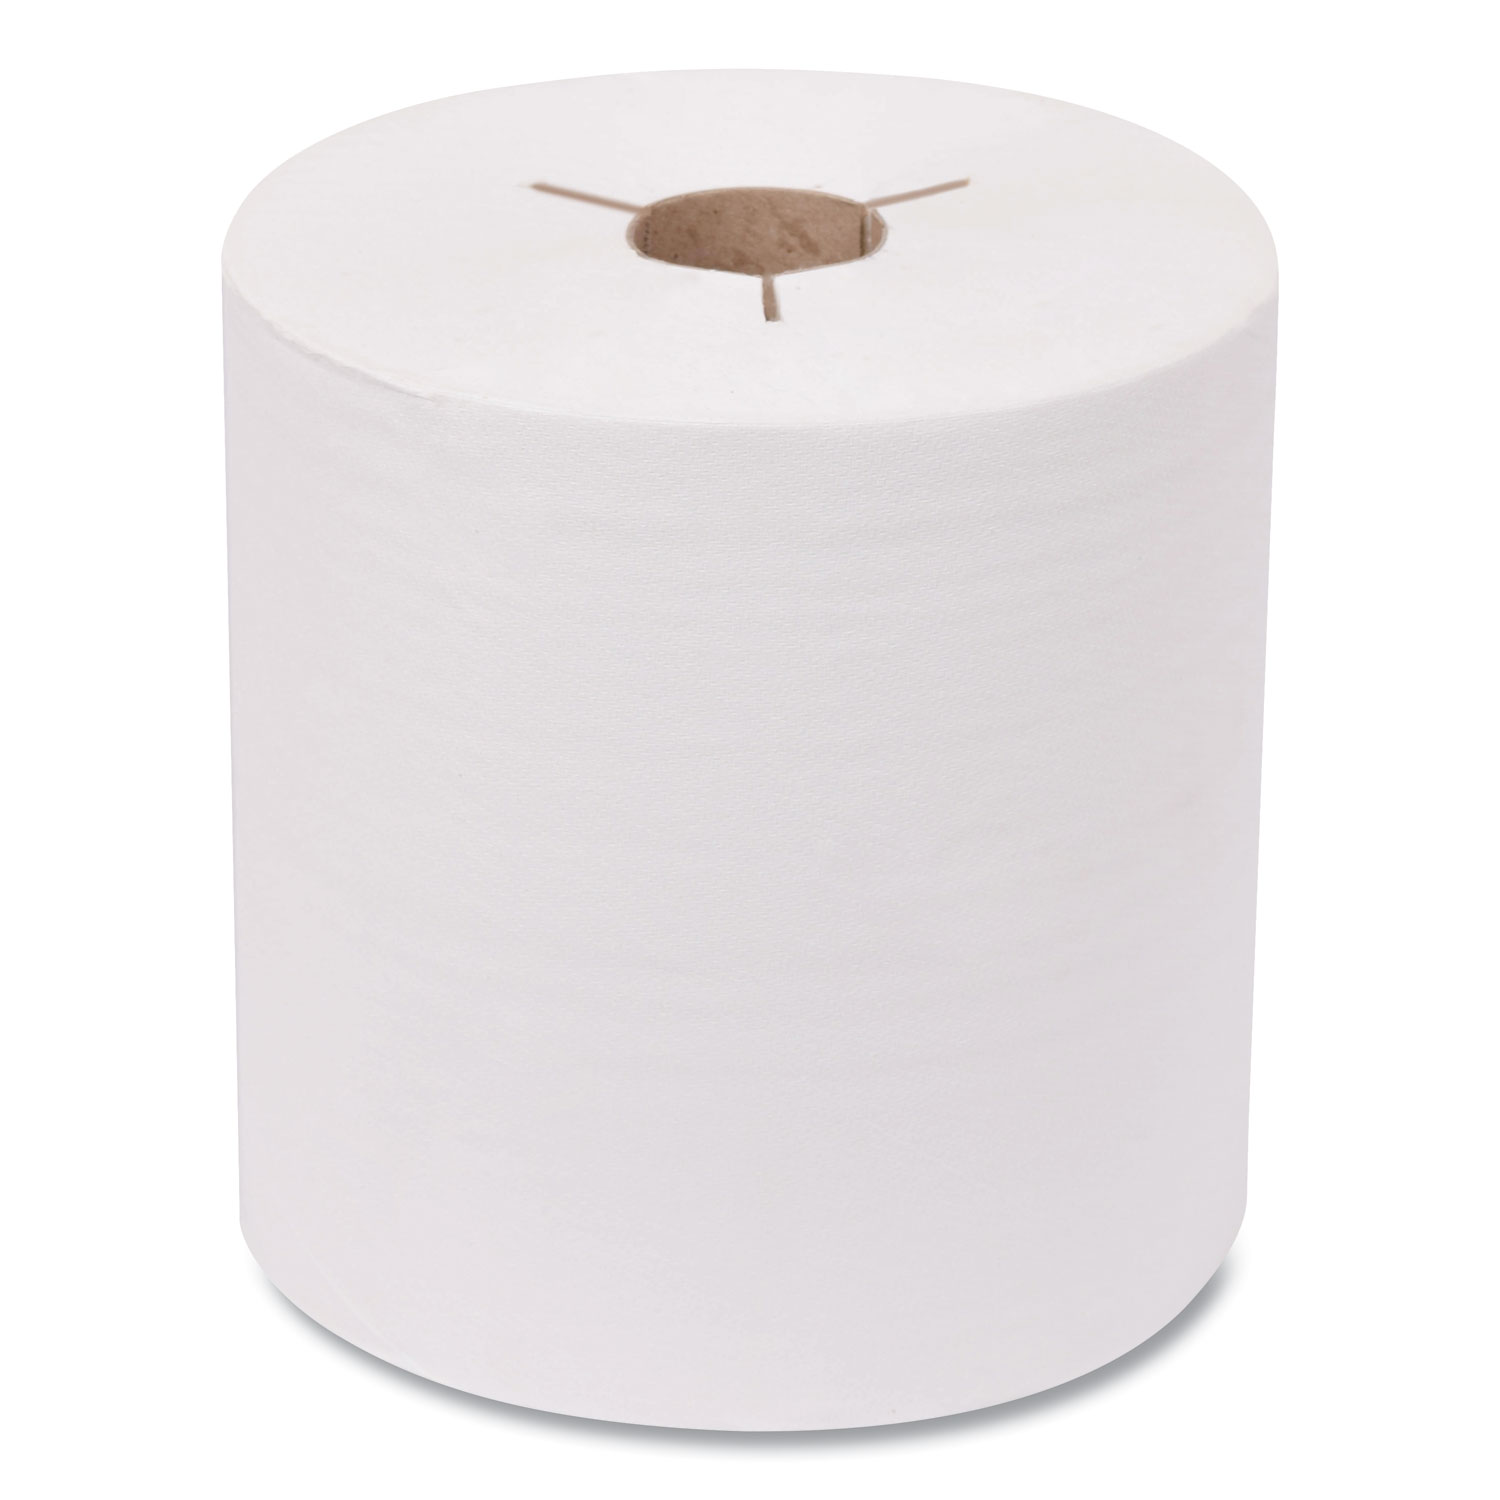  Tork 8031050 Advanced Hand Towel Roll, Notched, 1-Ply, 8 x 10, White, 1200/Roll, 6 Rolls/Carton (TRK8031050) 